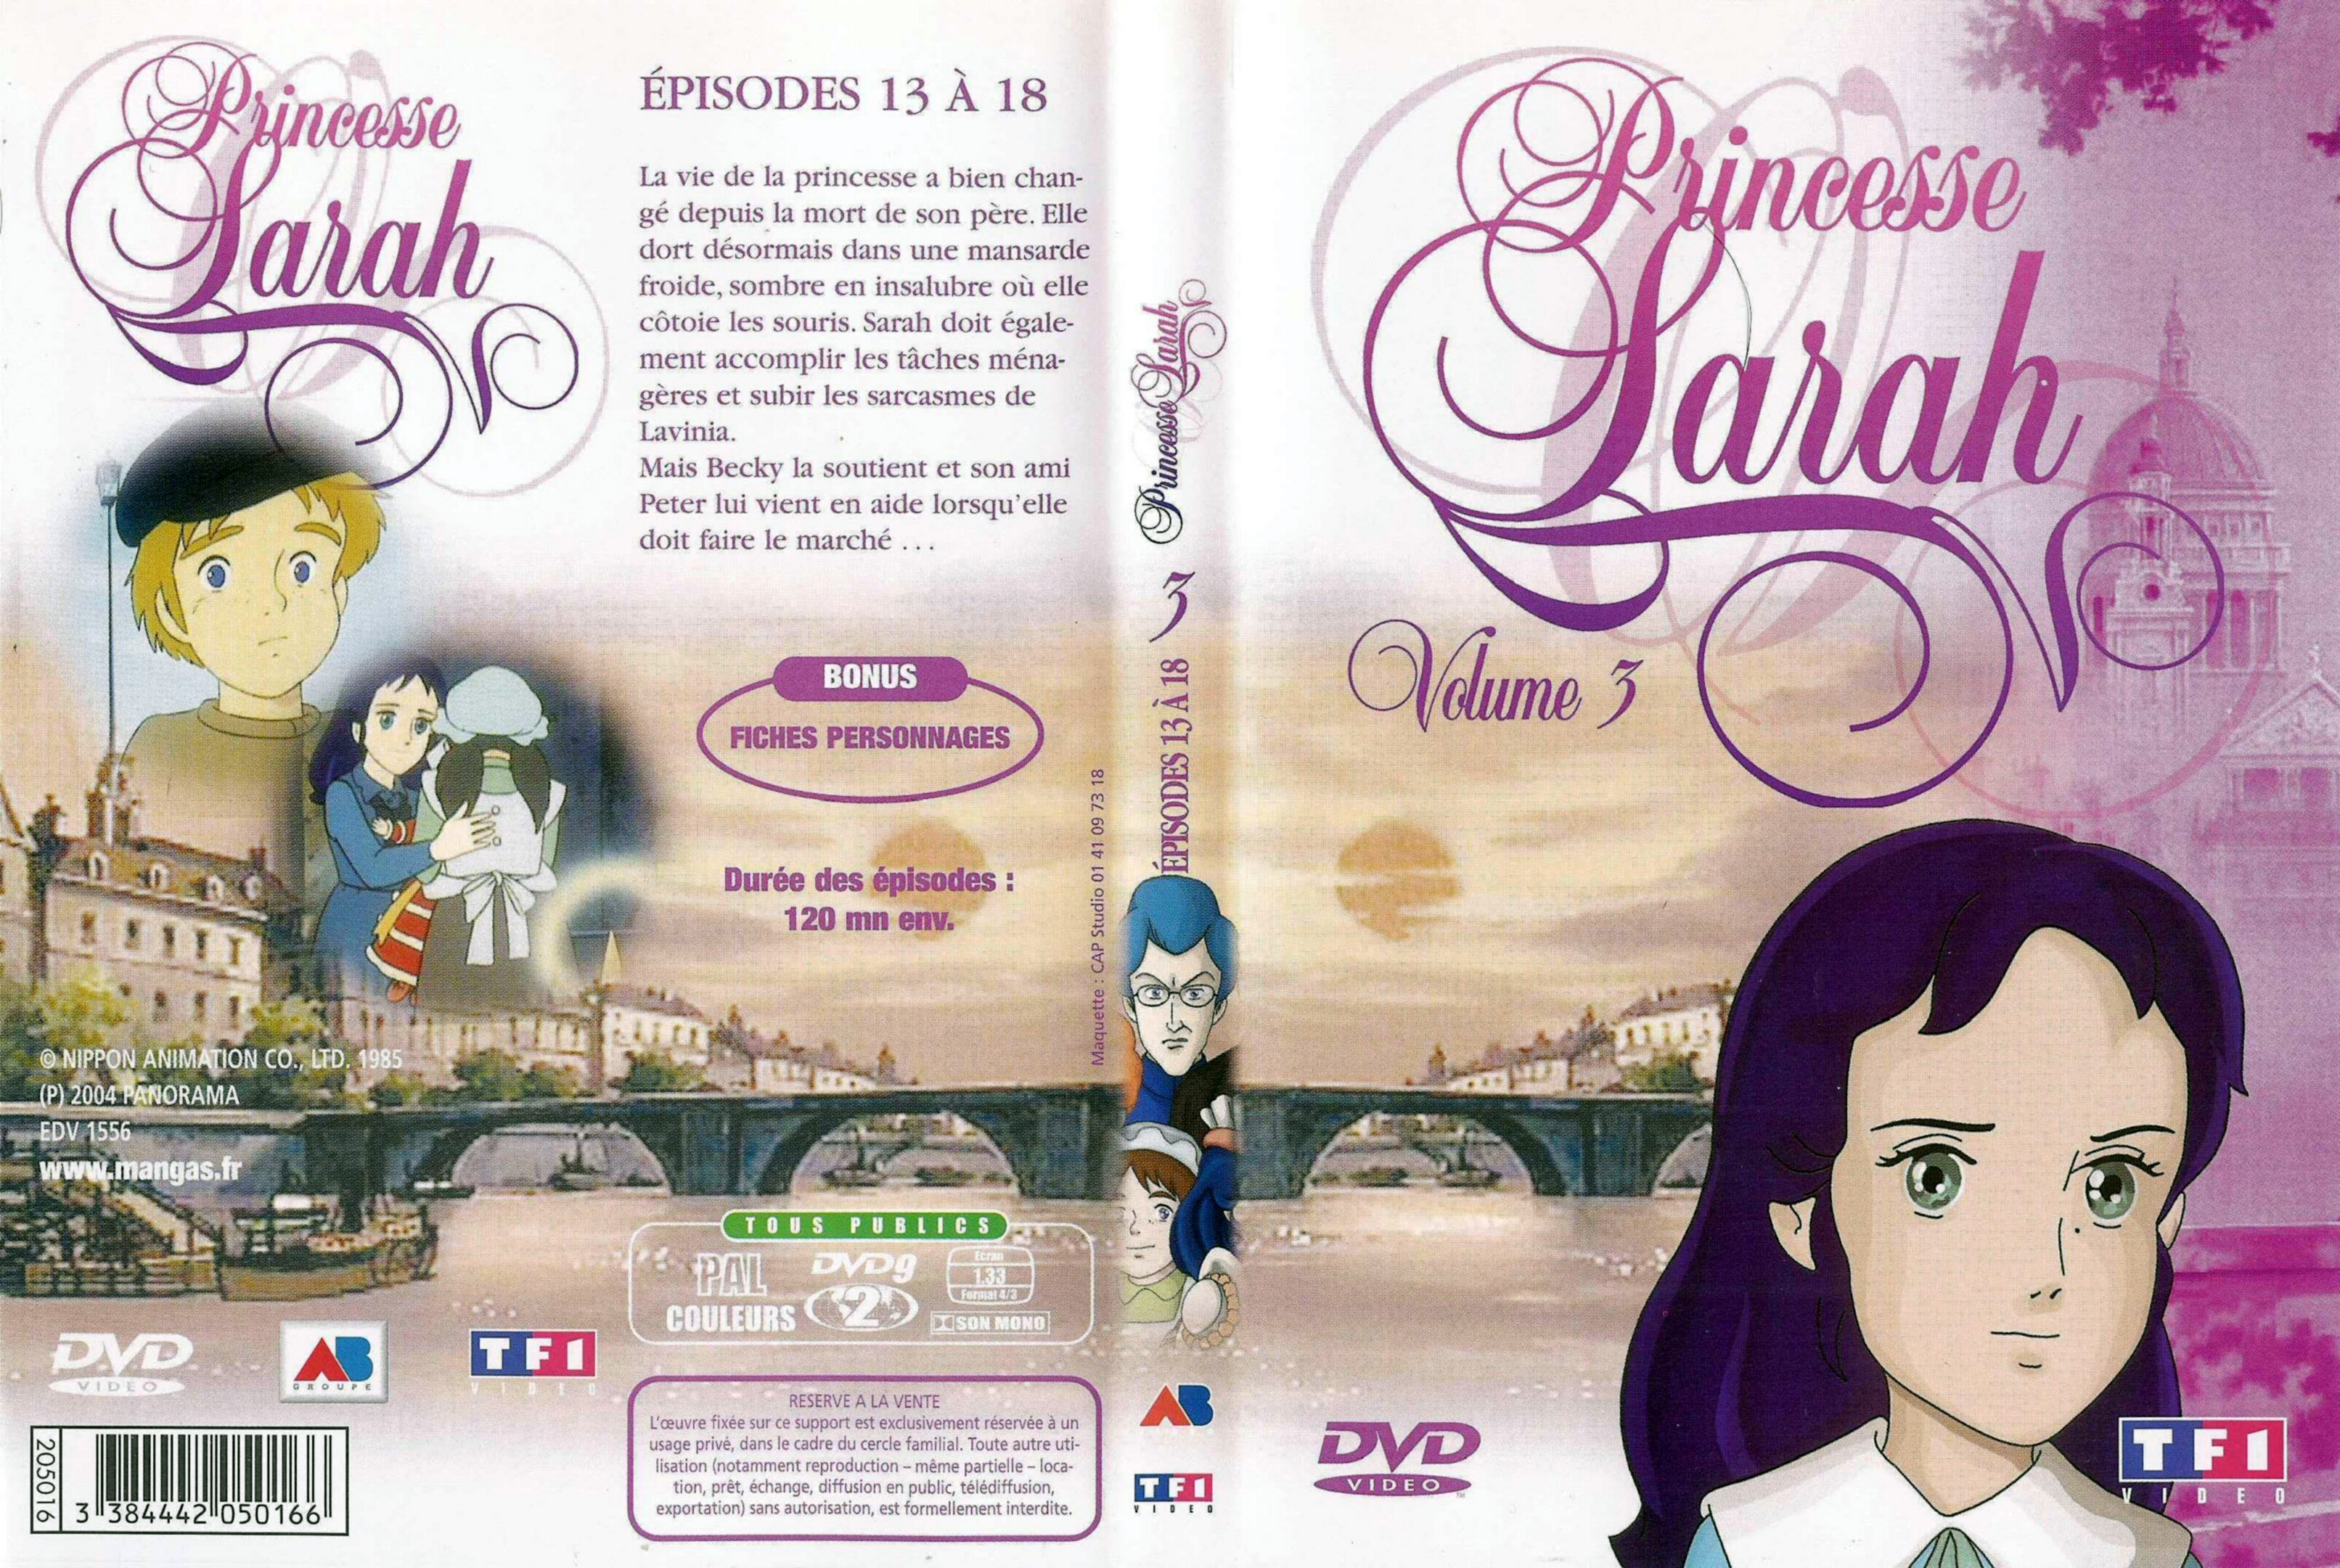 Jaquette DVD Princesse Sarah vol 3